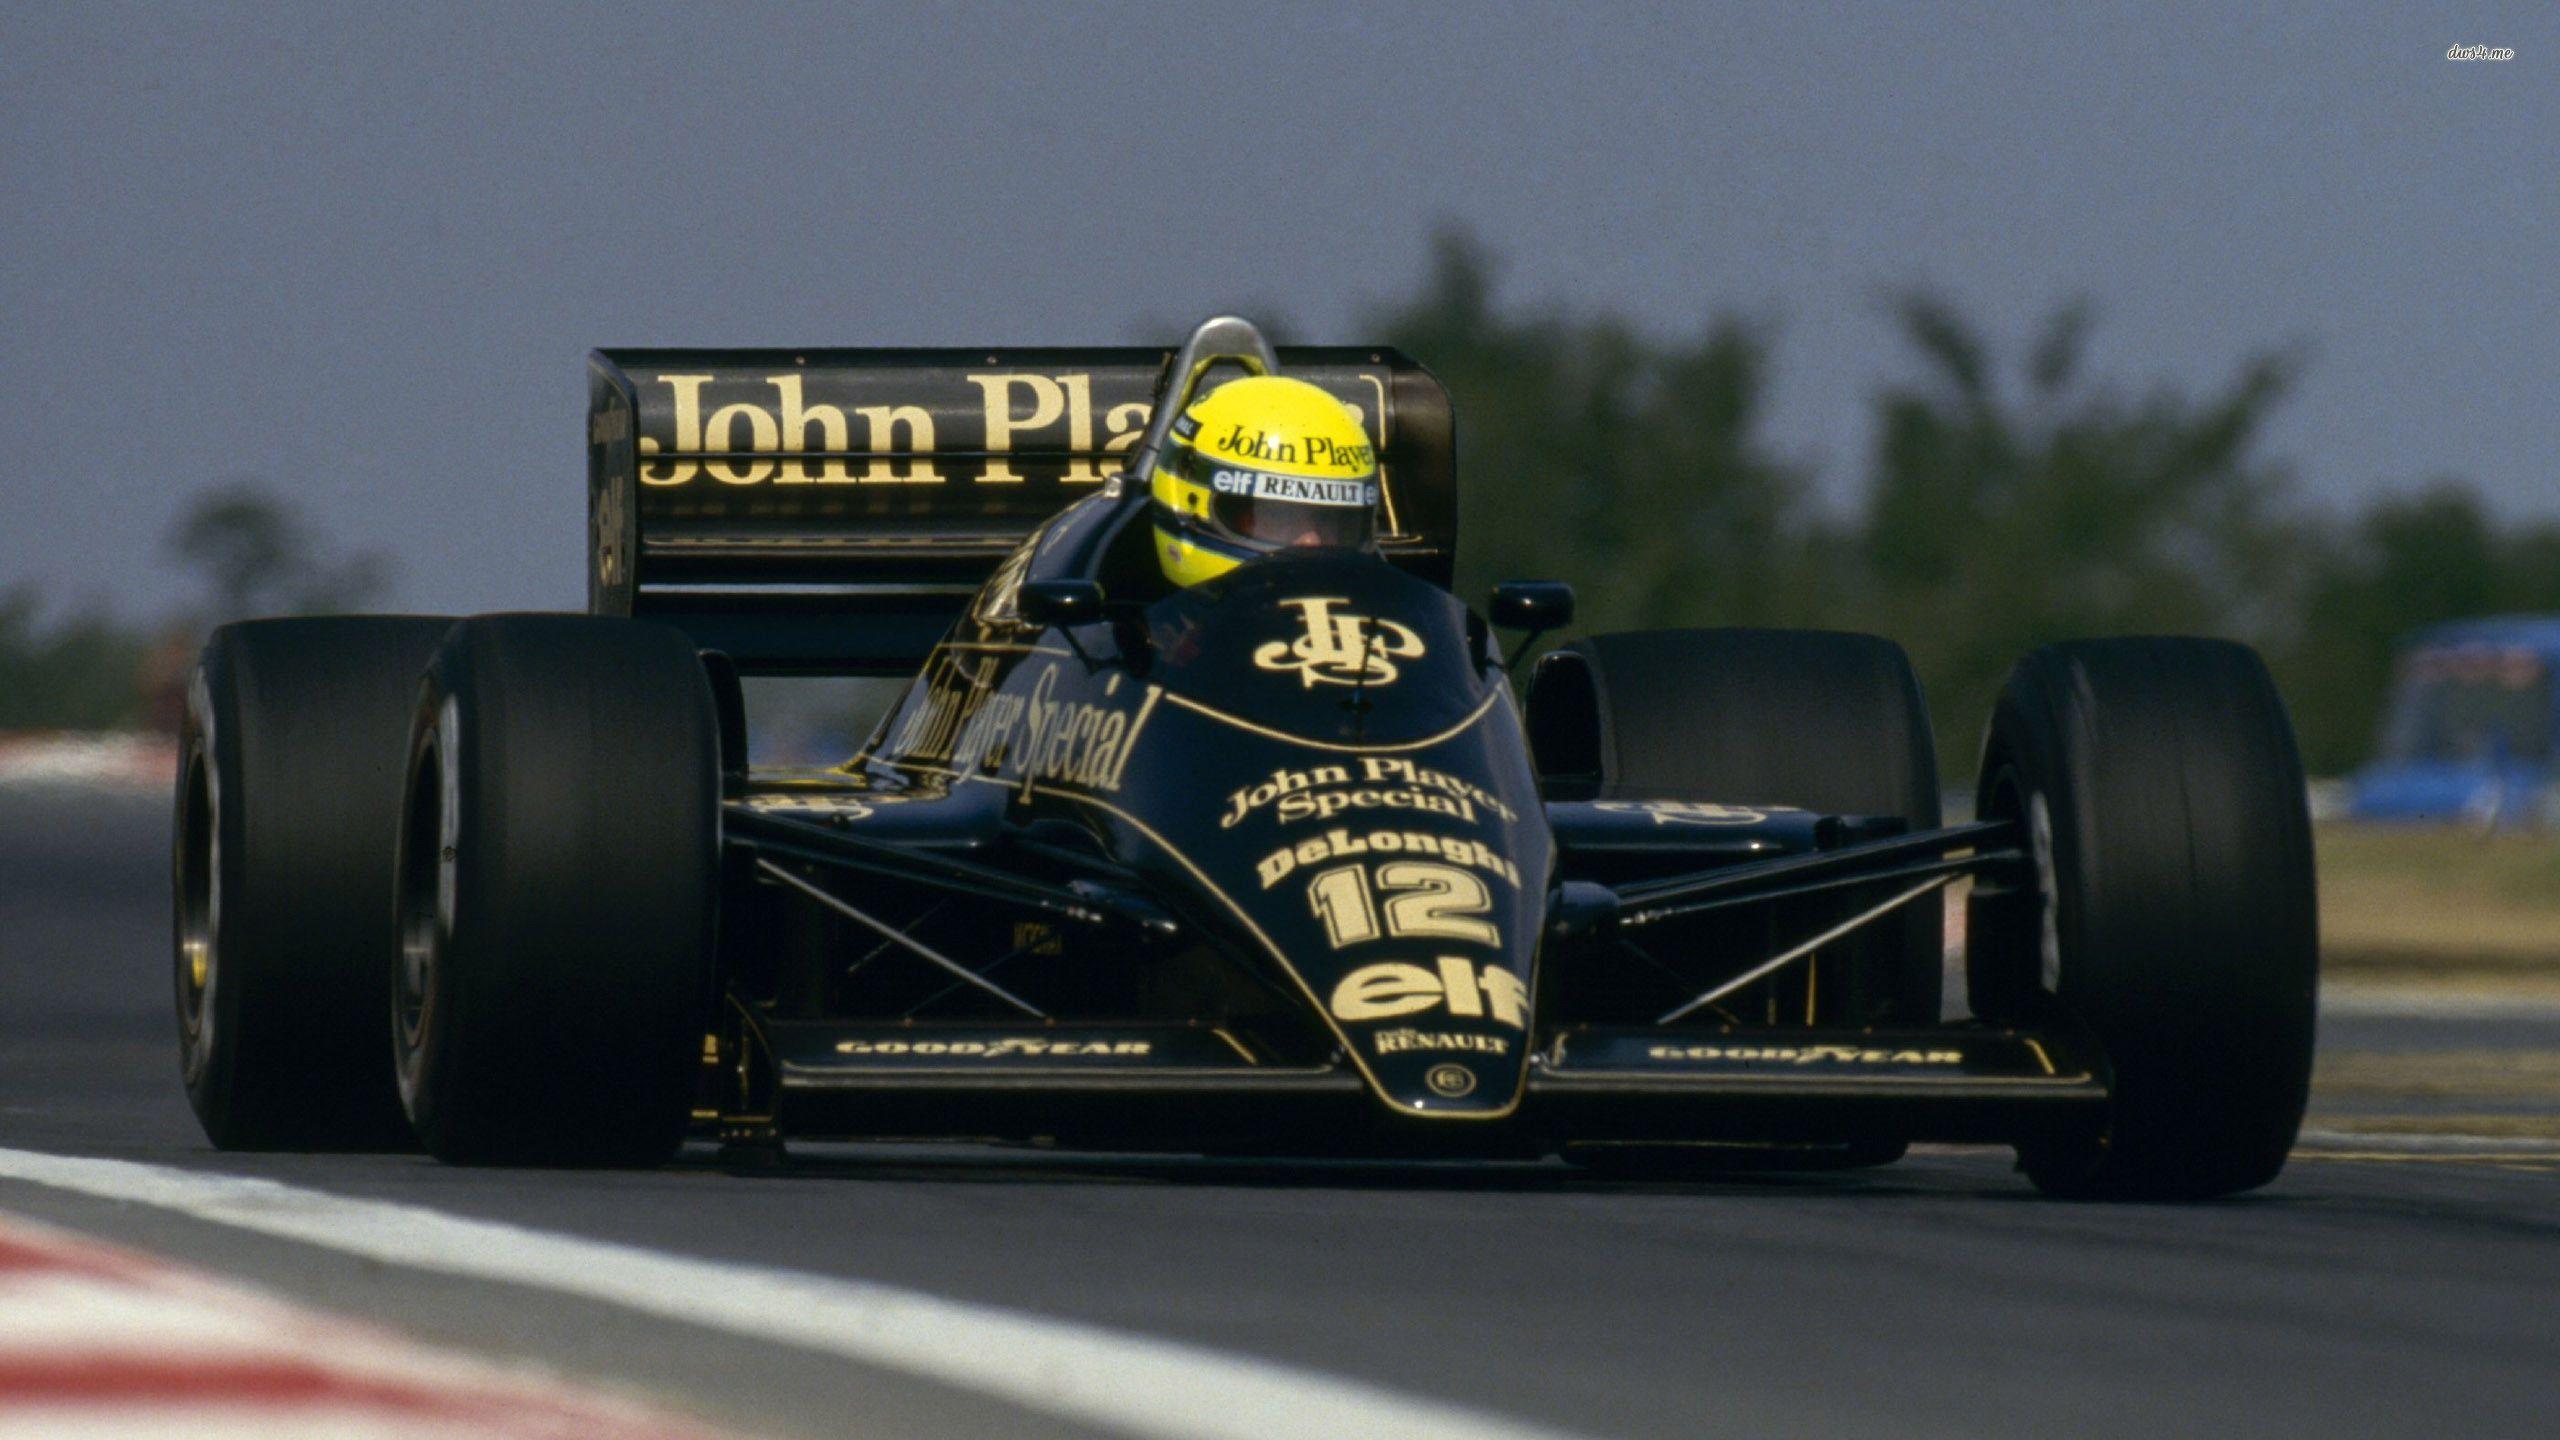 2560x1440 Hình nền Ayrton Senna - Hình nền thể thao - #.  Ayrton senna